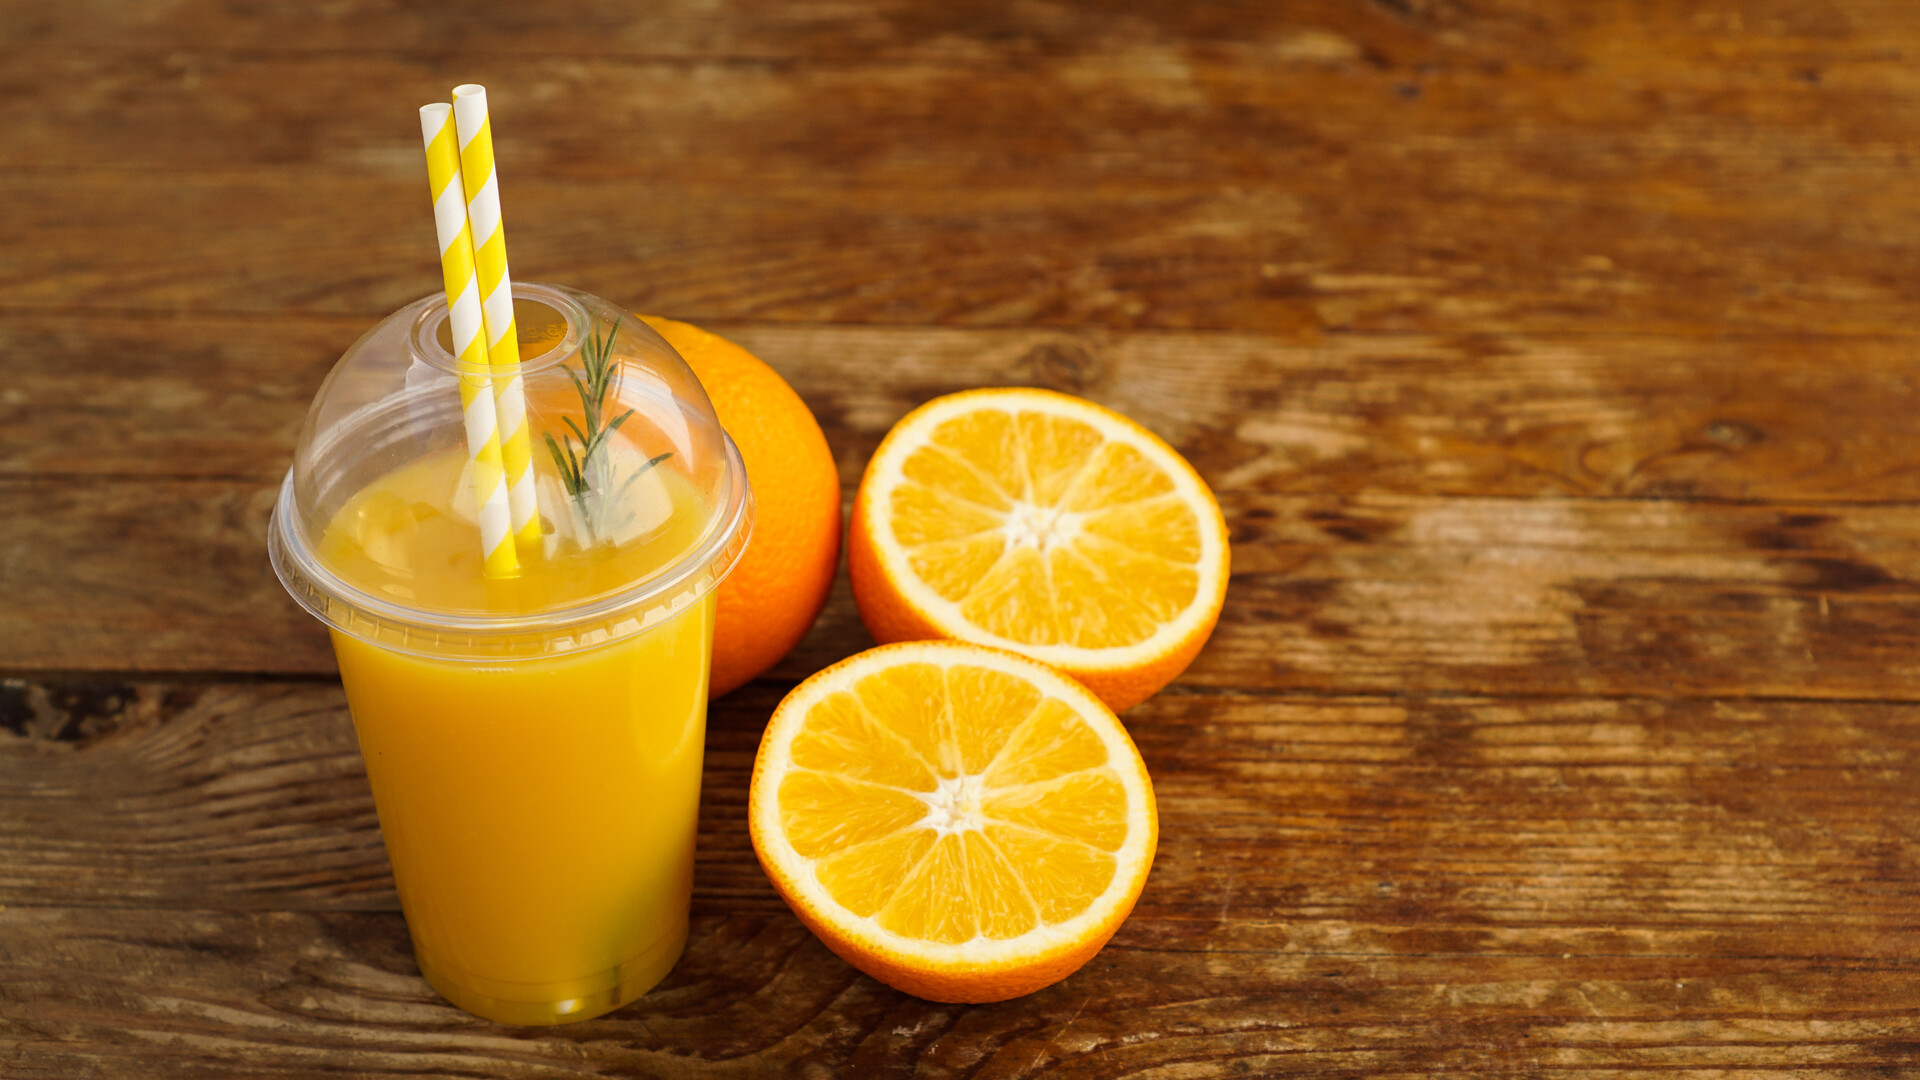 Florida Orange Juice Celebrates Win